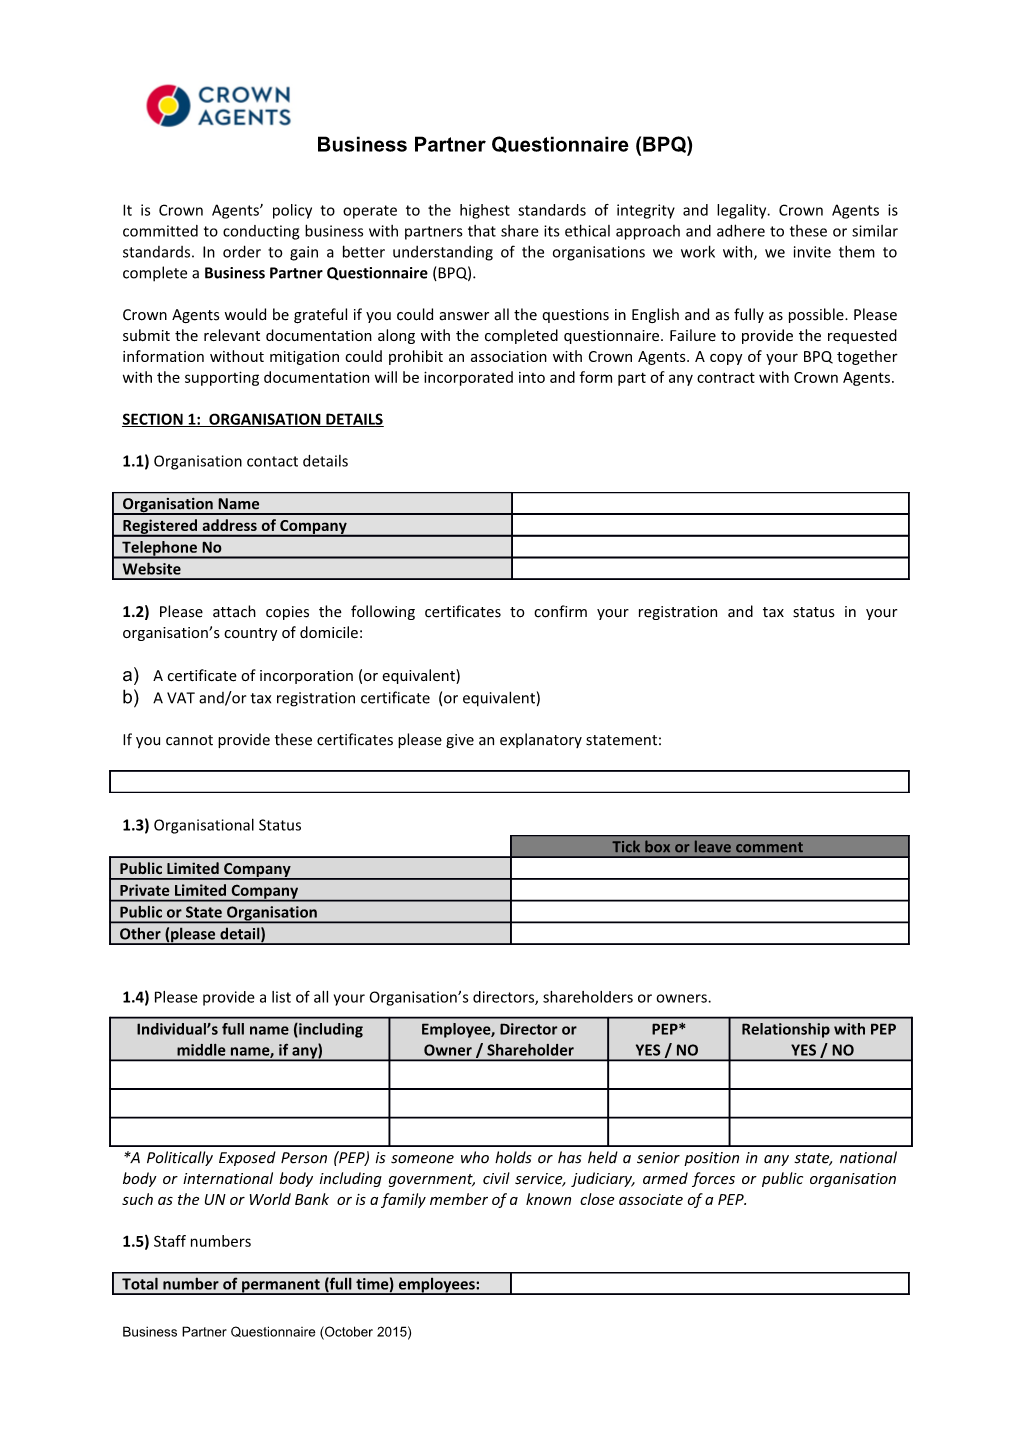 Section 1: Organisation Details